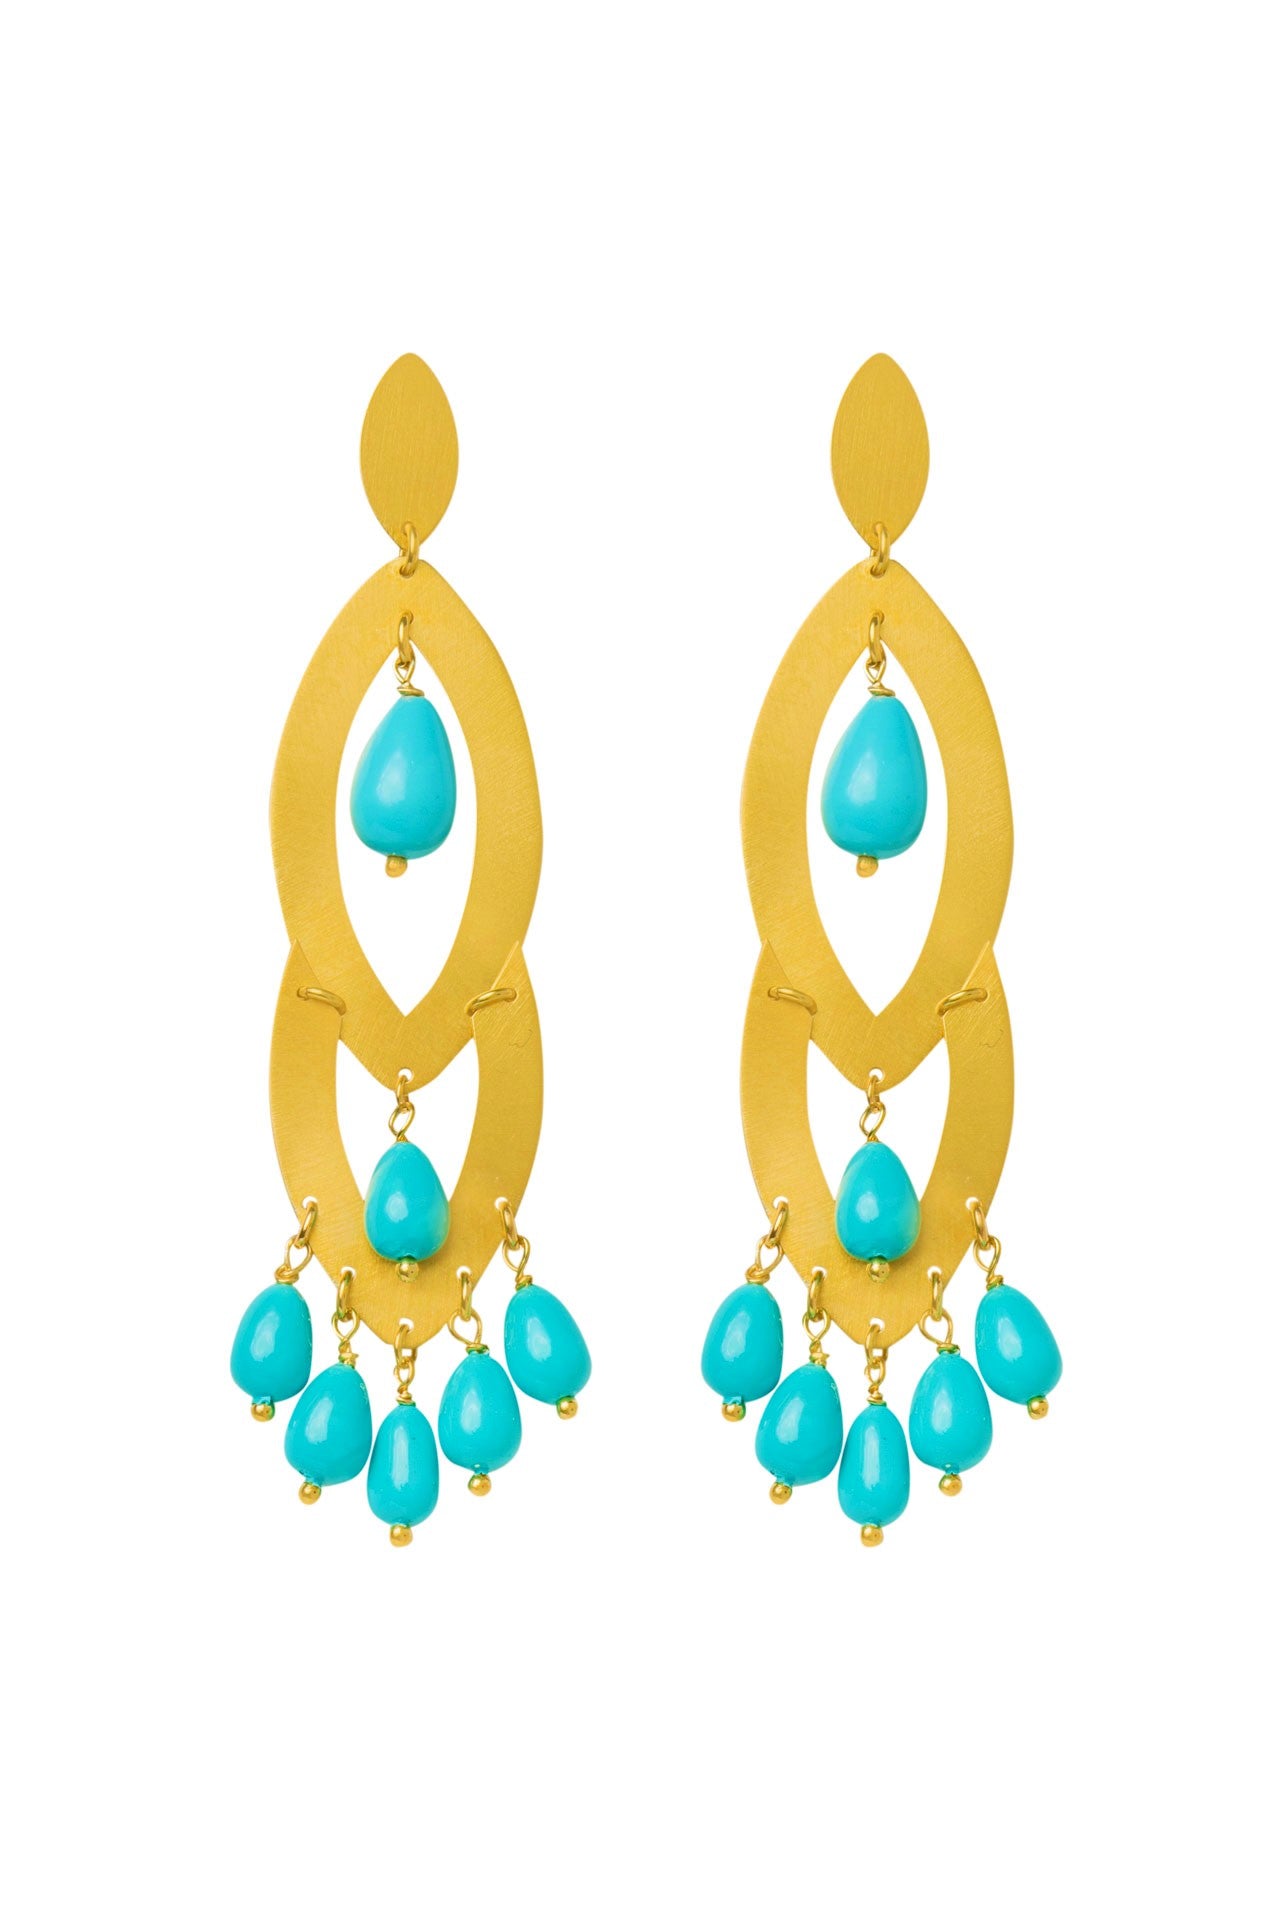 Deniz turquoise Earrings Silver 925° by Pearl Martini